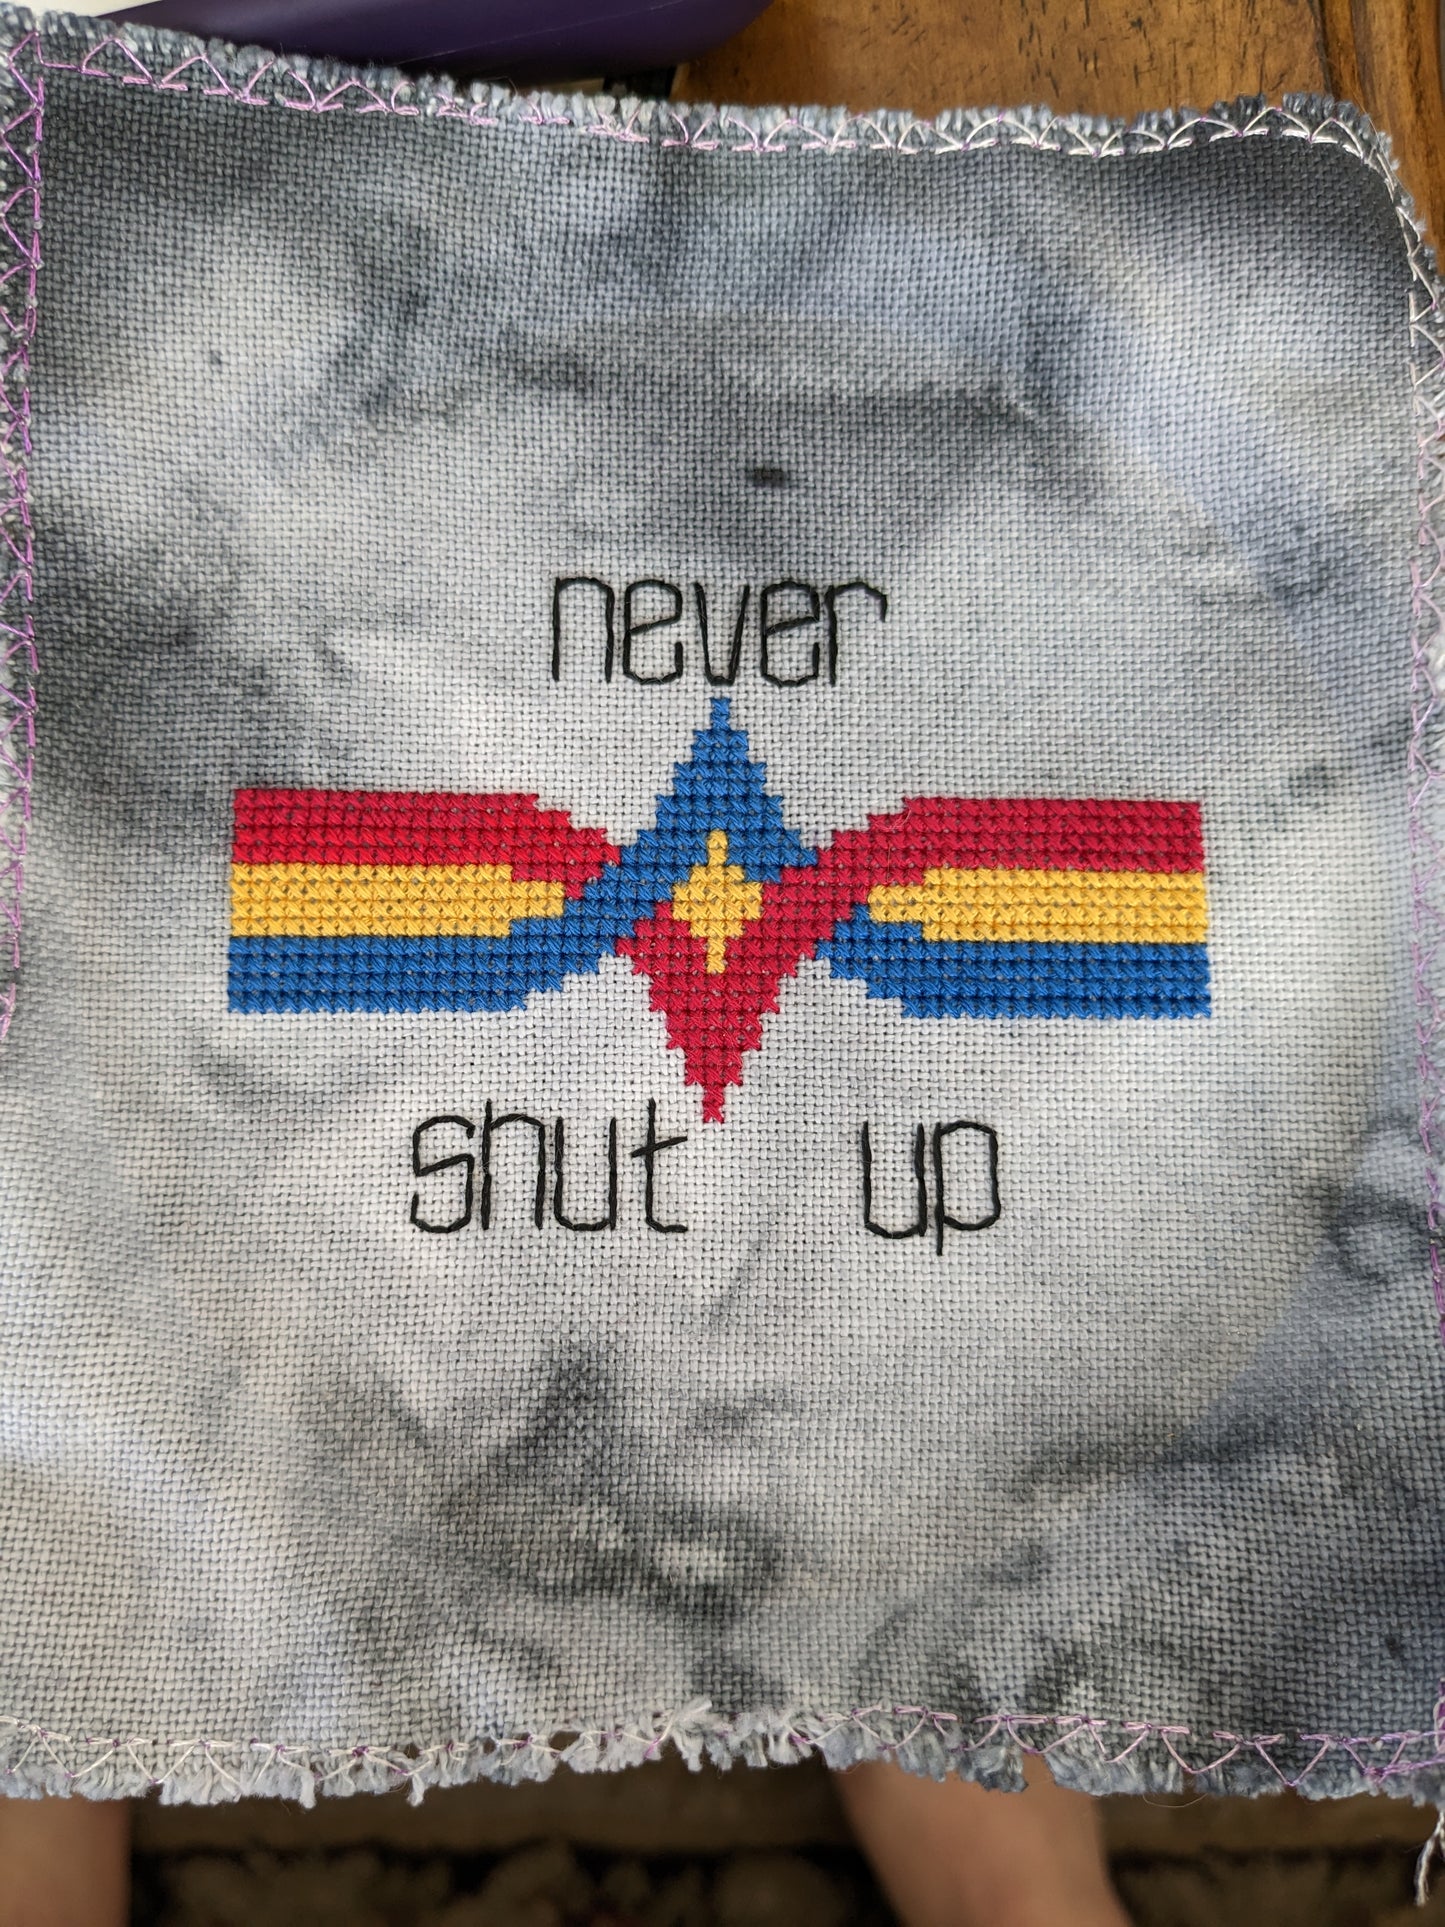 Never Shut Up: Trek-inspired Cross Stitch Pattern - instant PDF Download